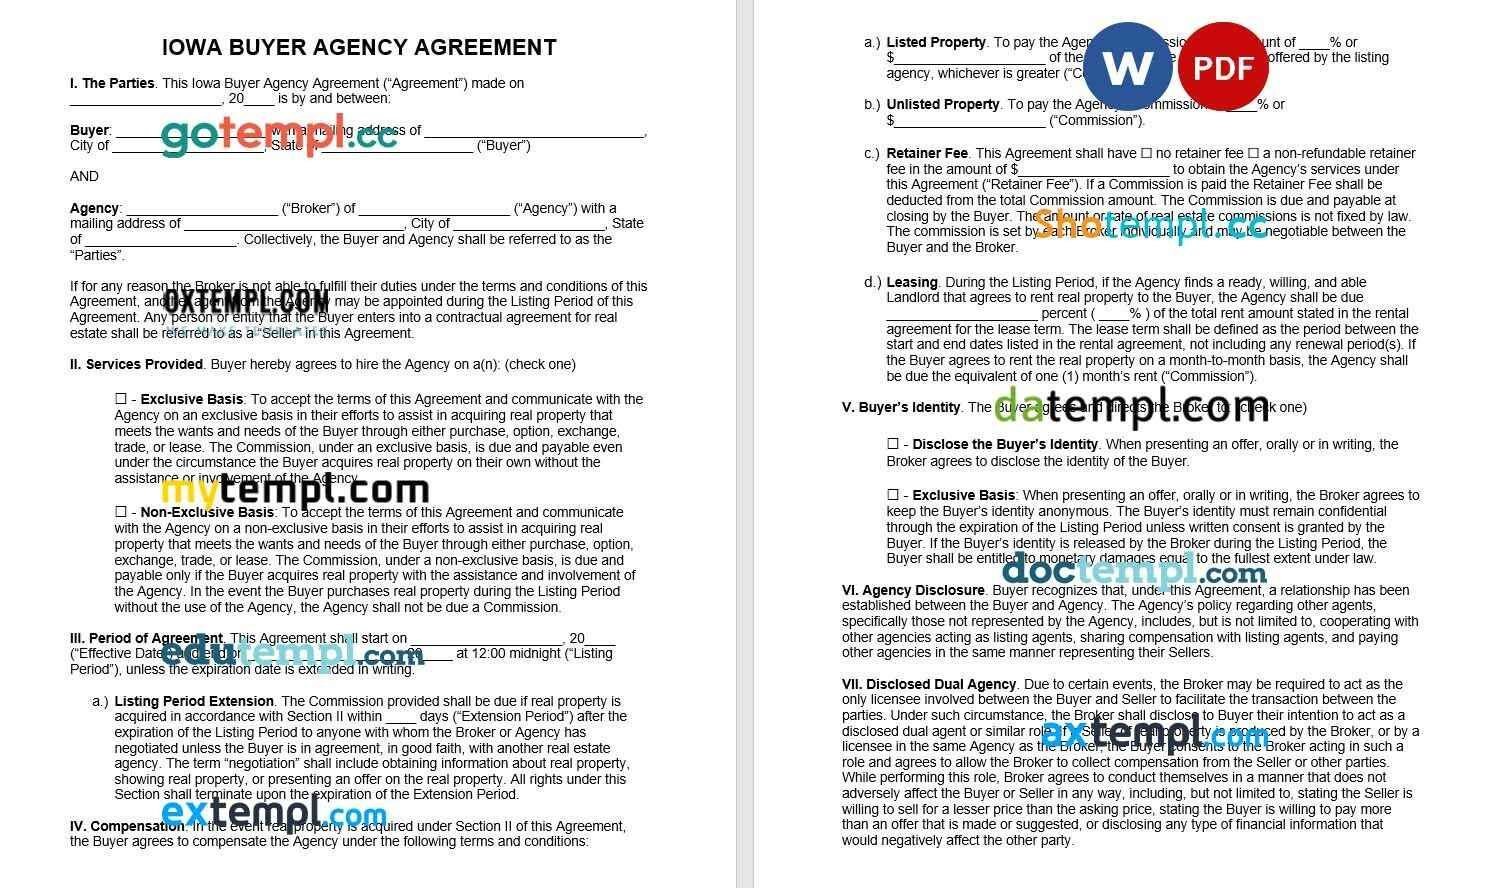 Iowa Buyer Agency Agreement Word example, fully editable